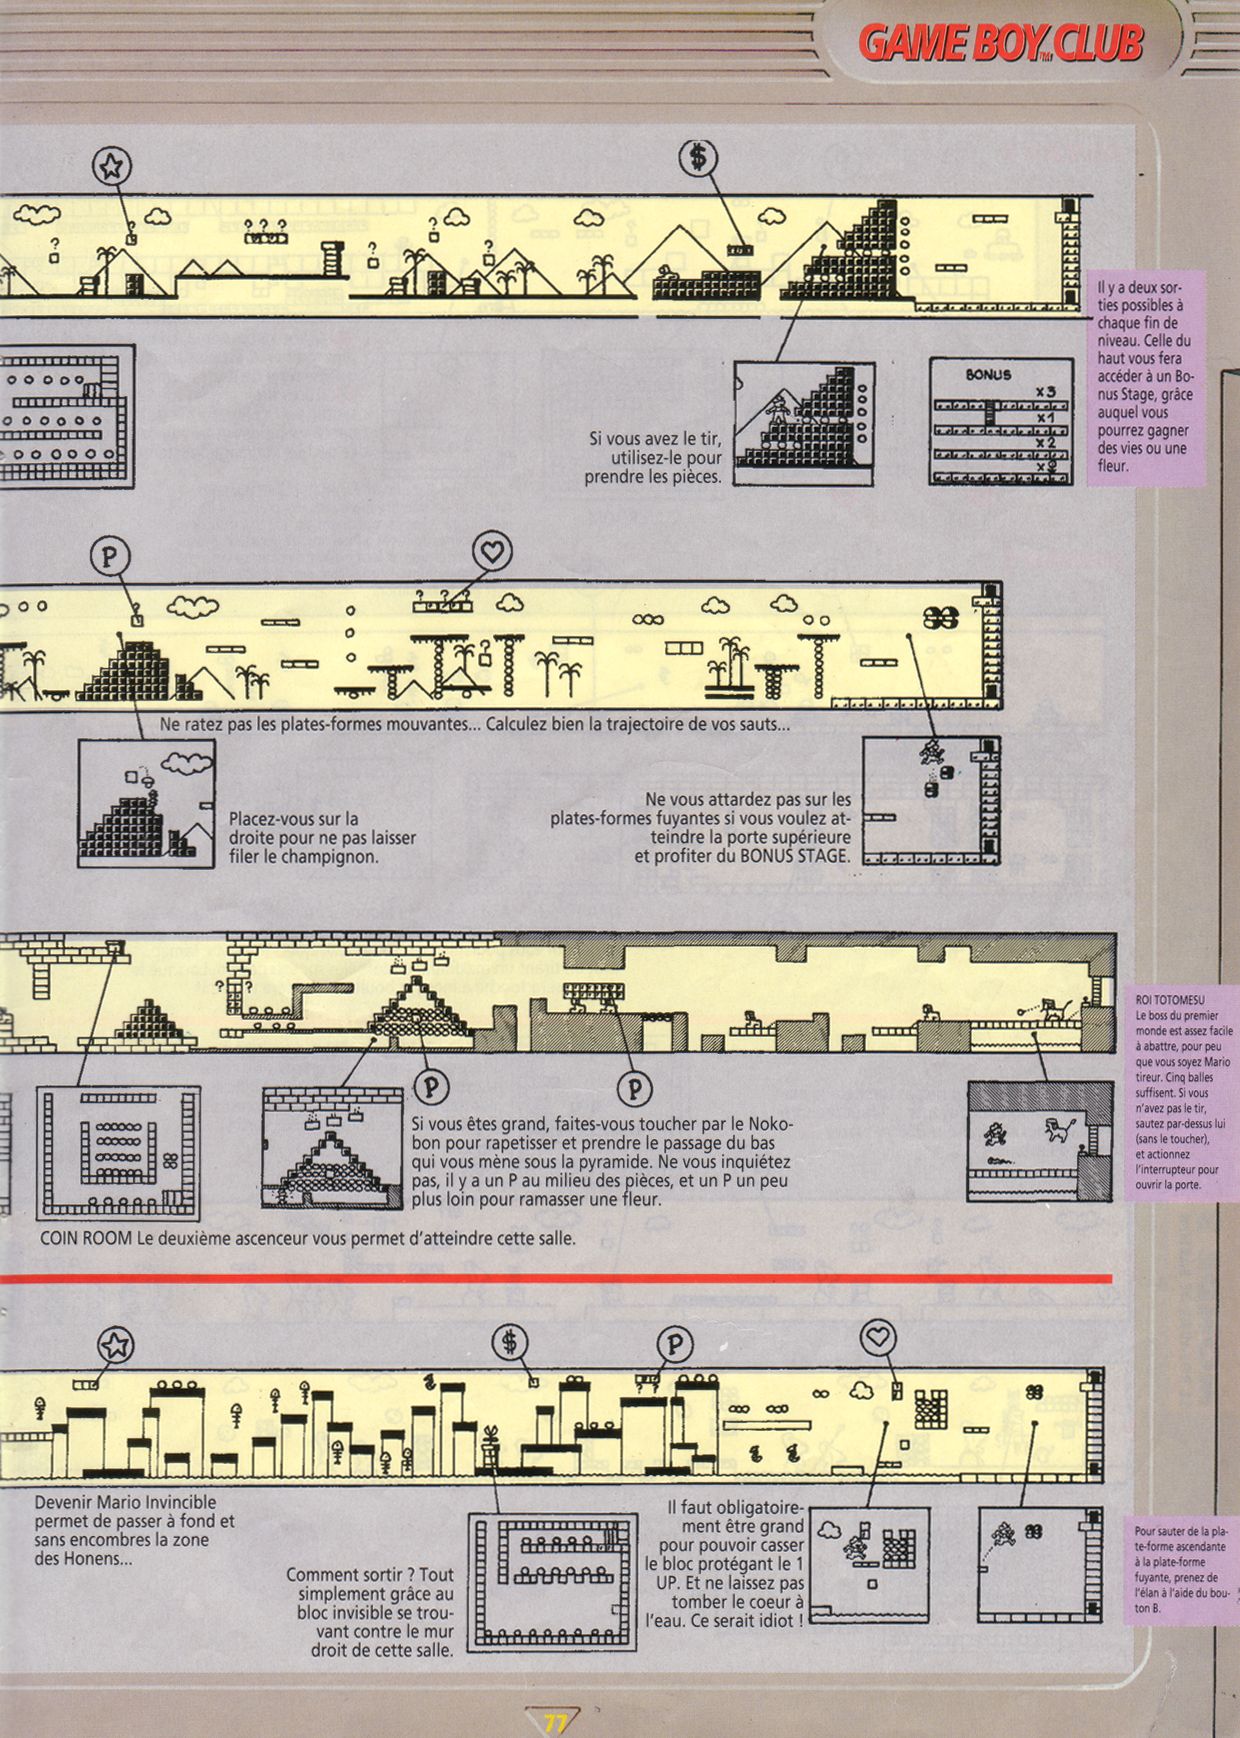 tests//1/Nintendo Player 001 - Page 077 (1991-10-11).jpg